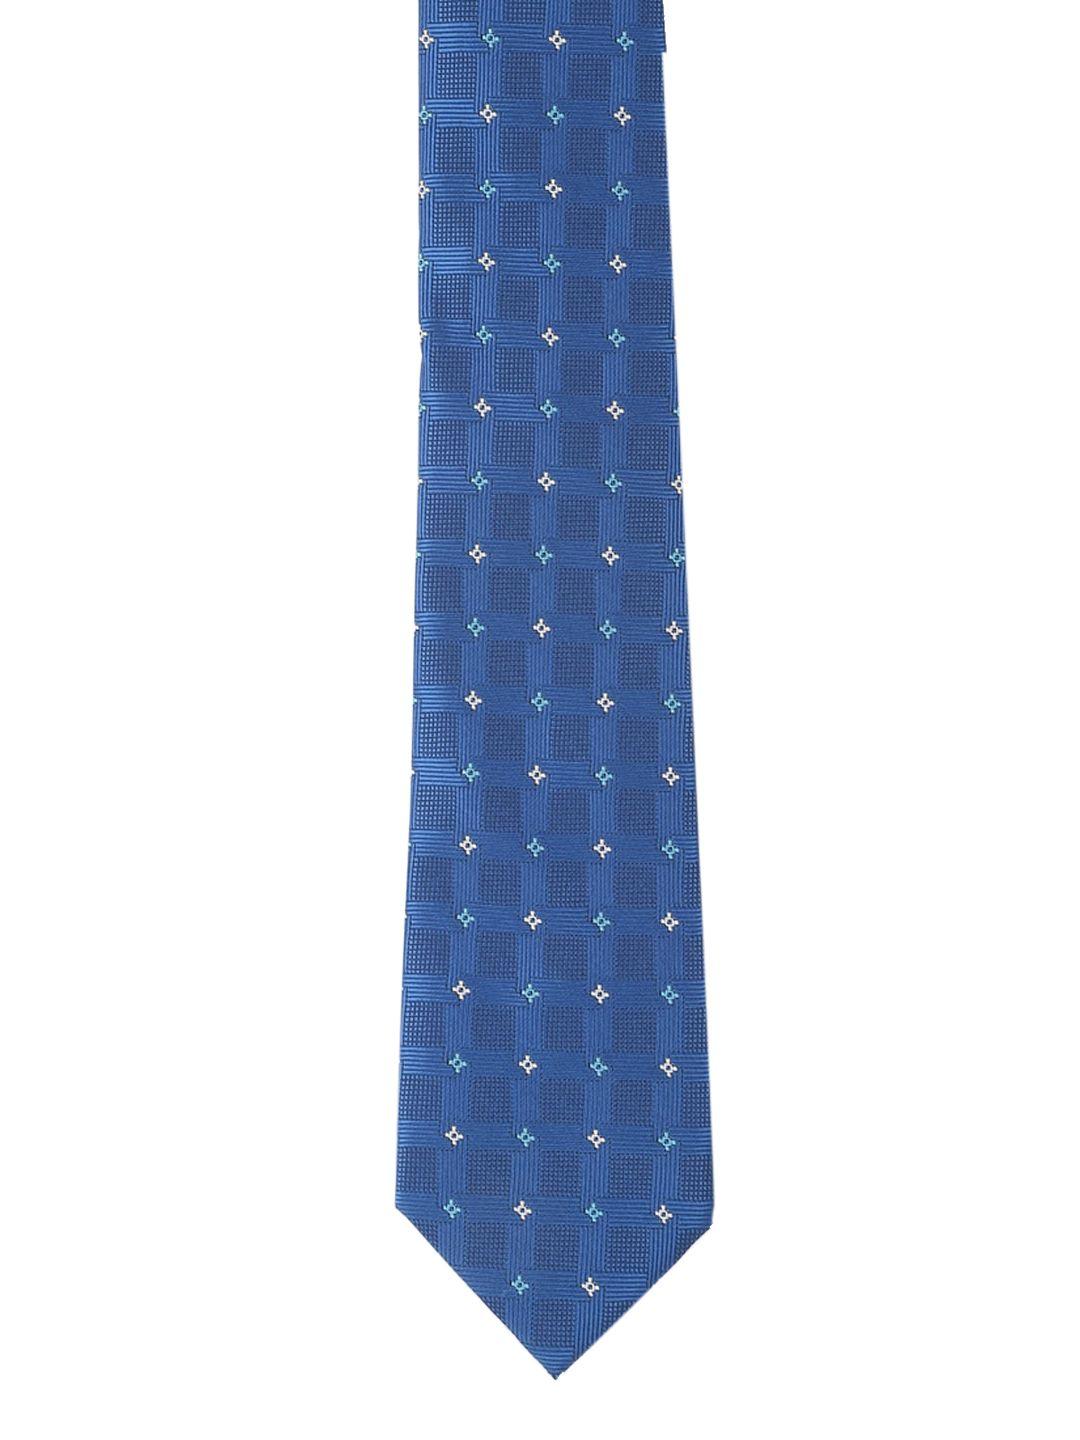 peter england men blue & white woven-design tie & pocket square gift set